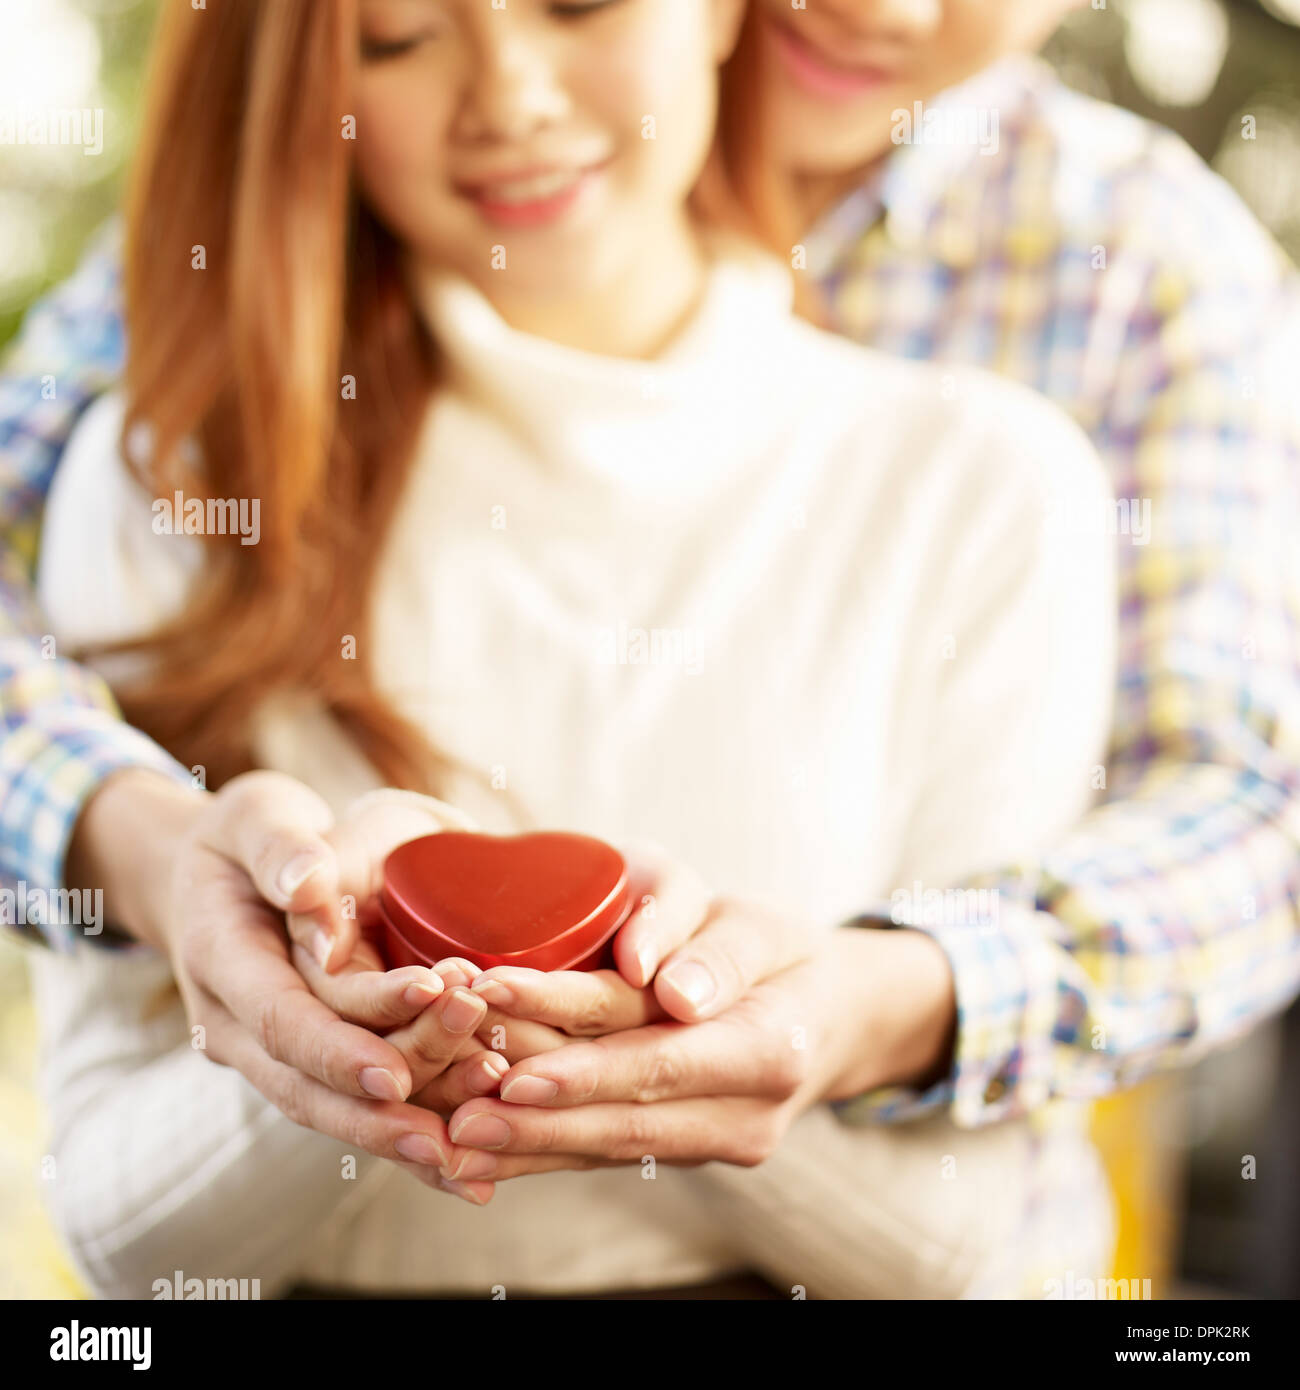 loving asian couple Stock Photo